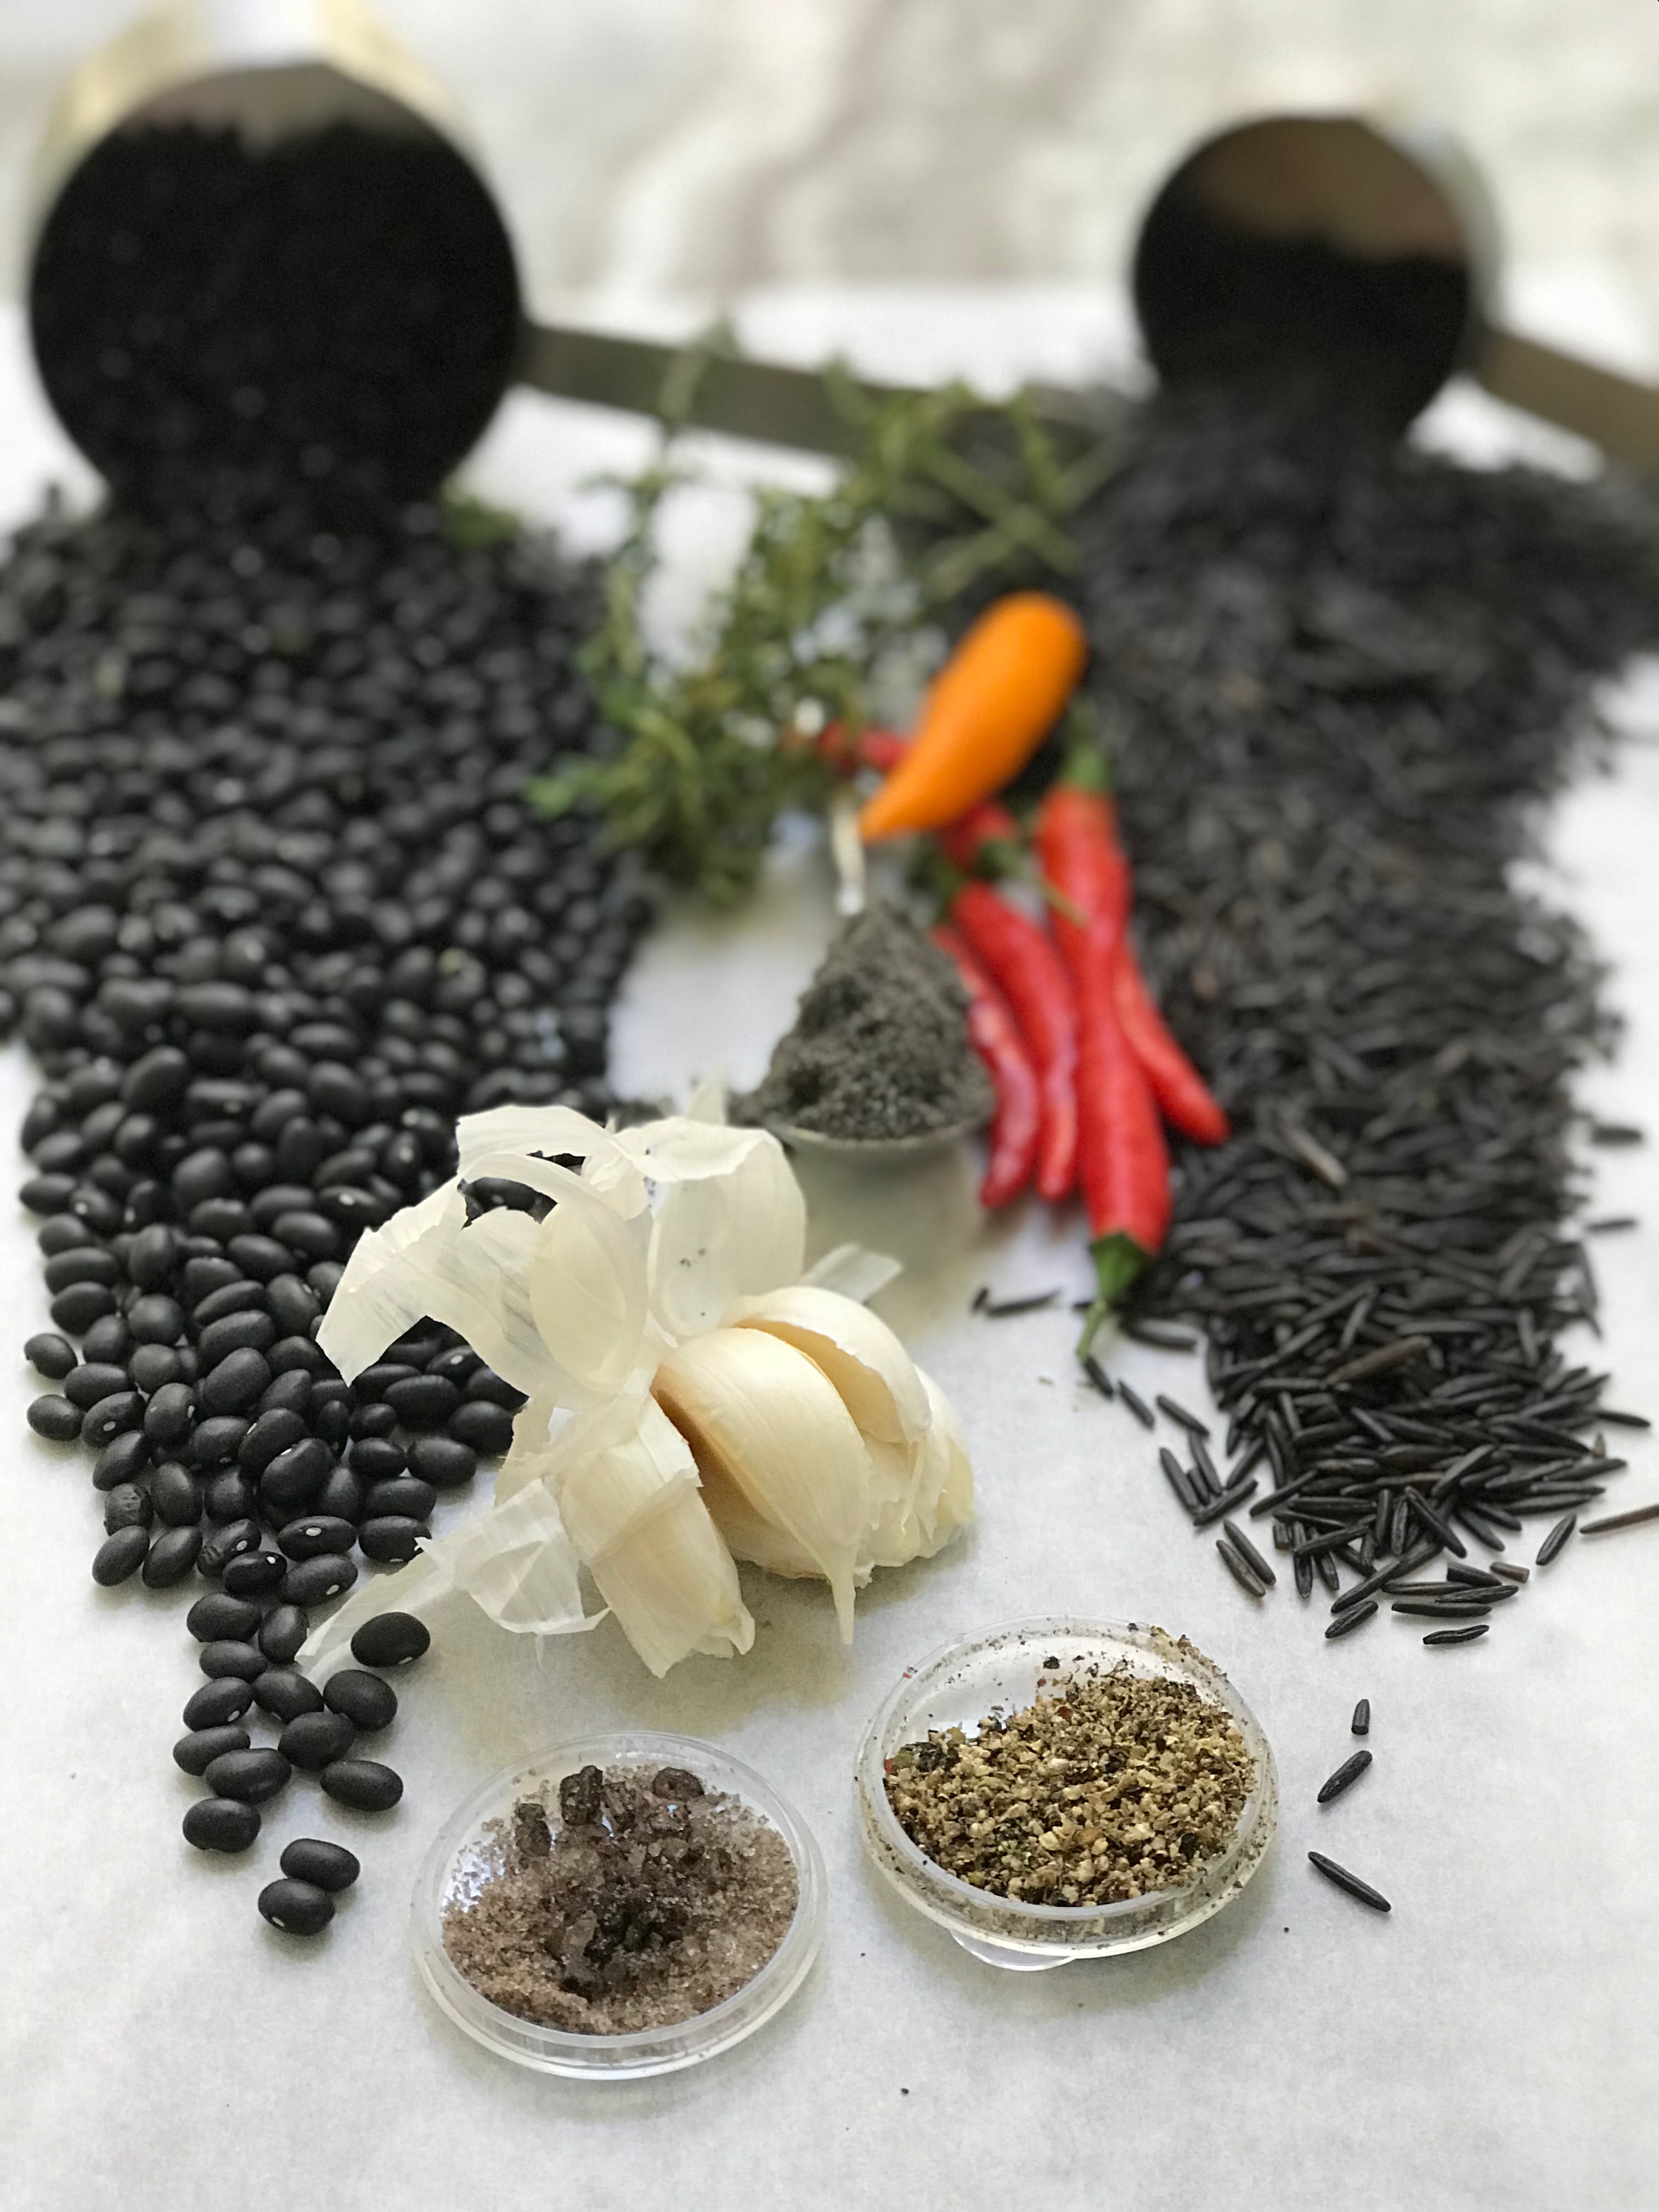 Black beans, black cumin, black rice, smoked salt and Thai chili peppers